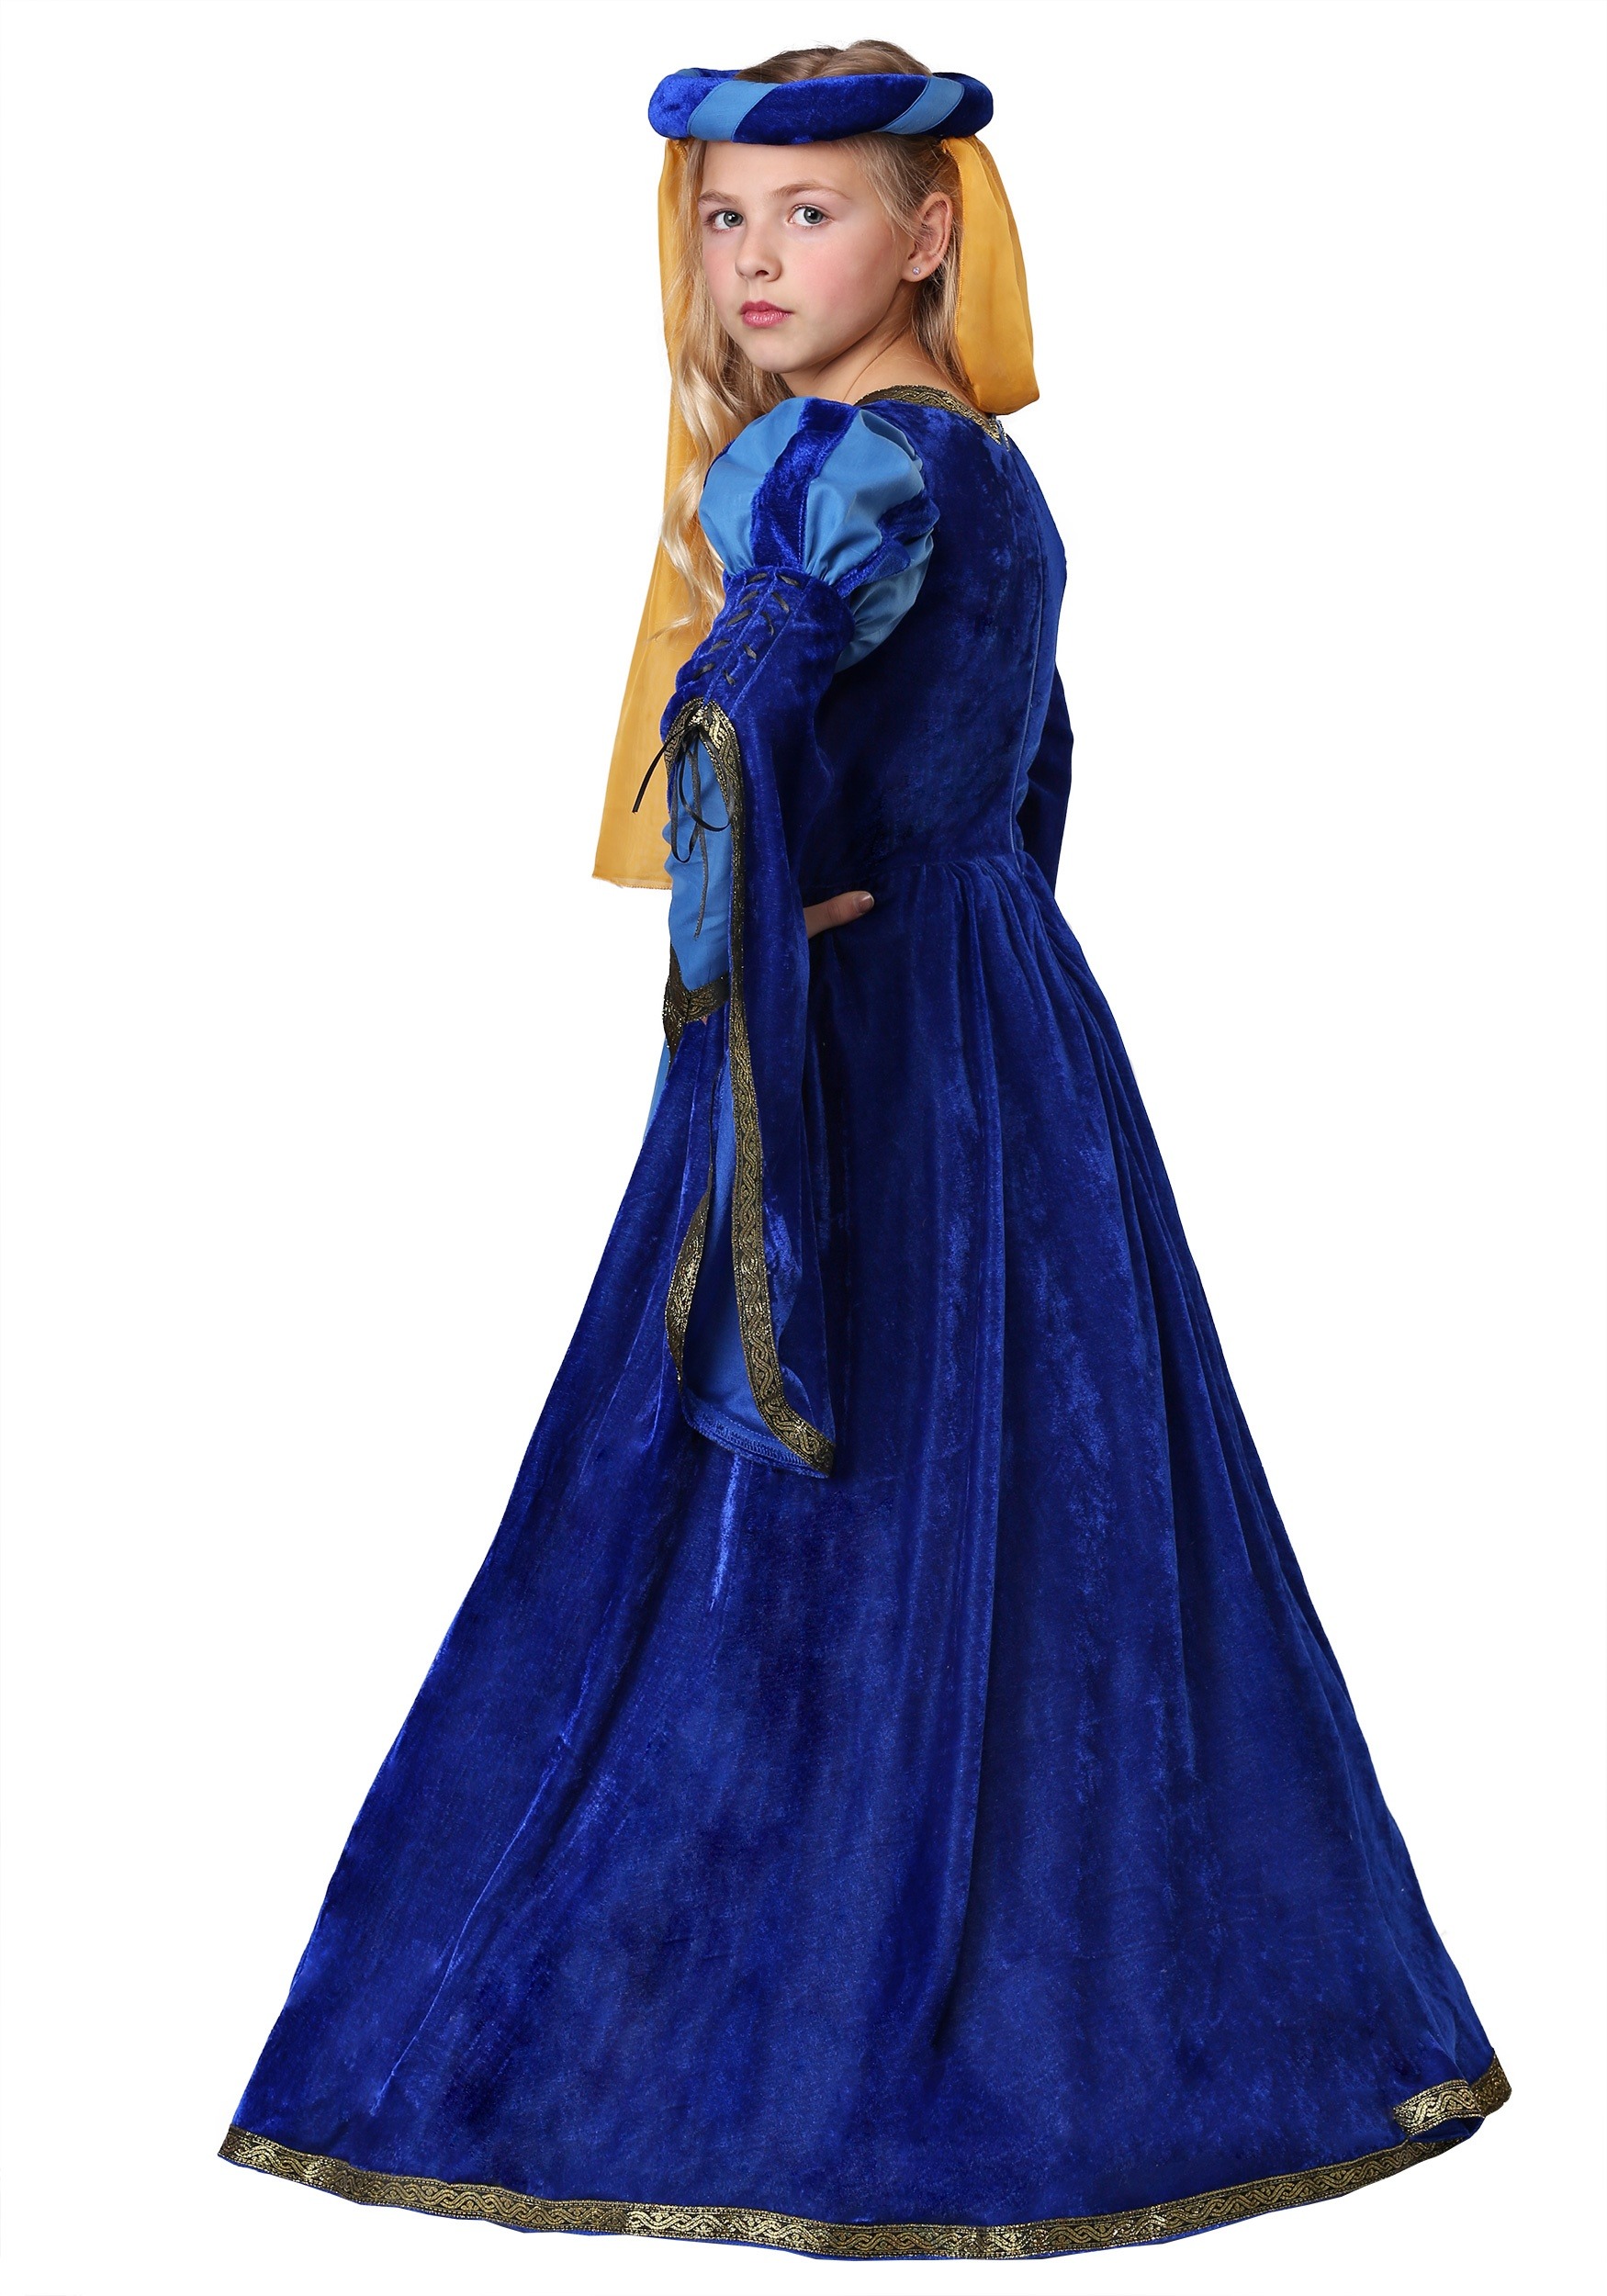 Renaissance Queen For Girls Costume